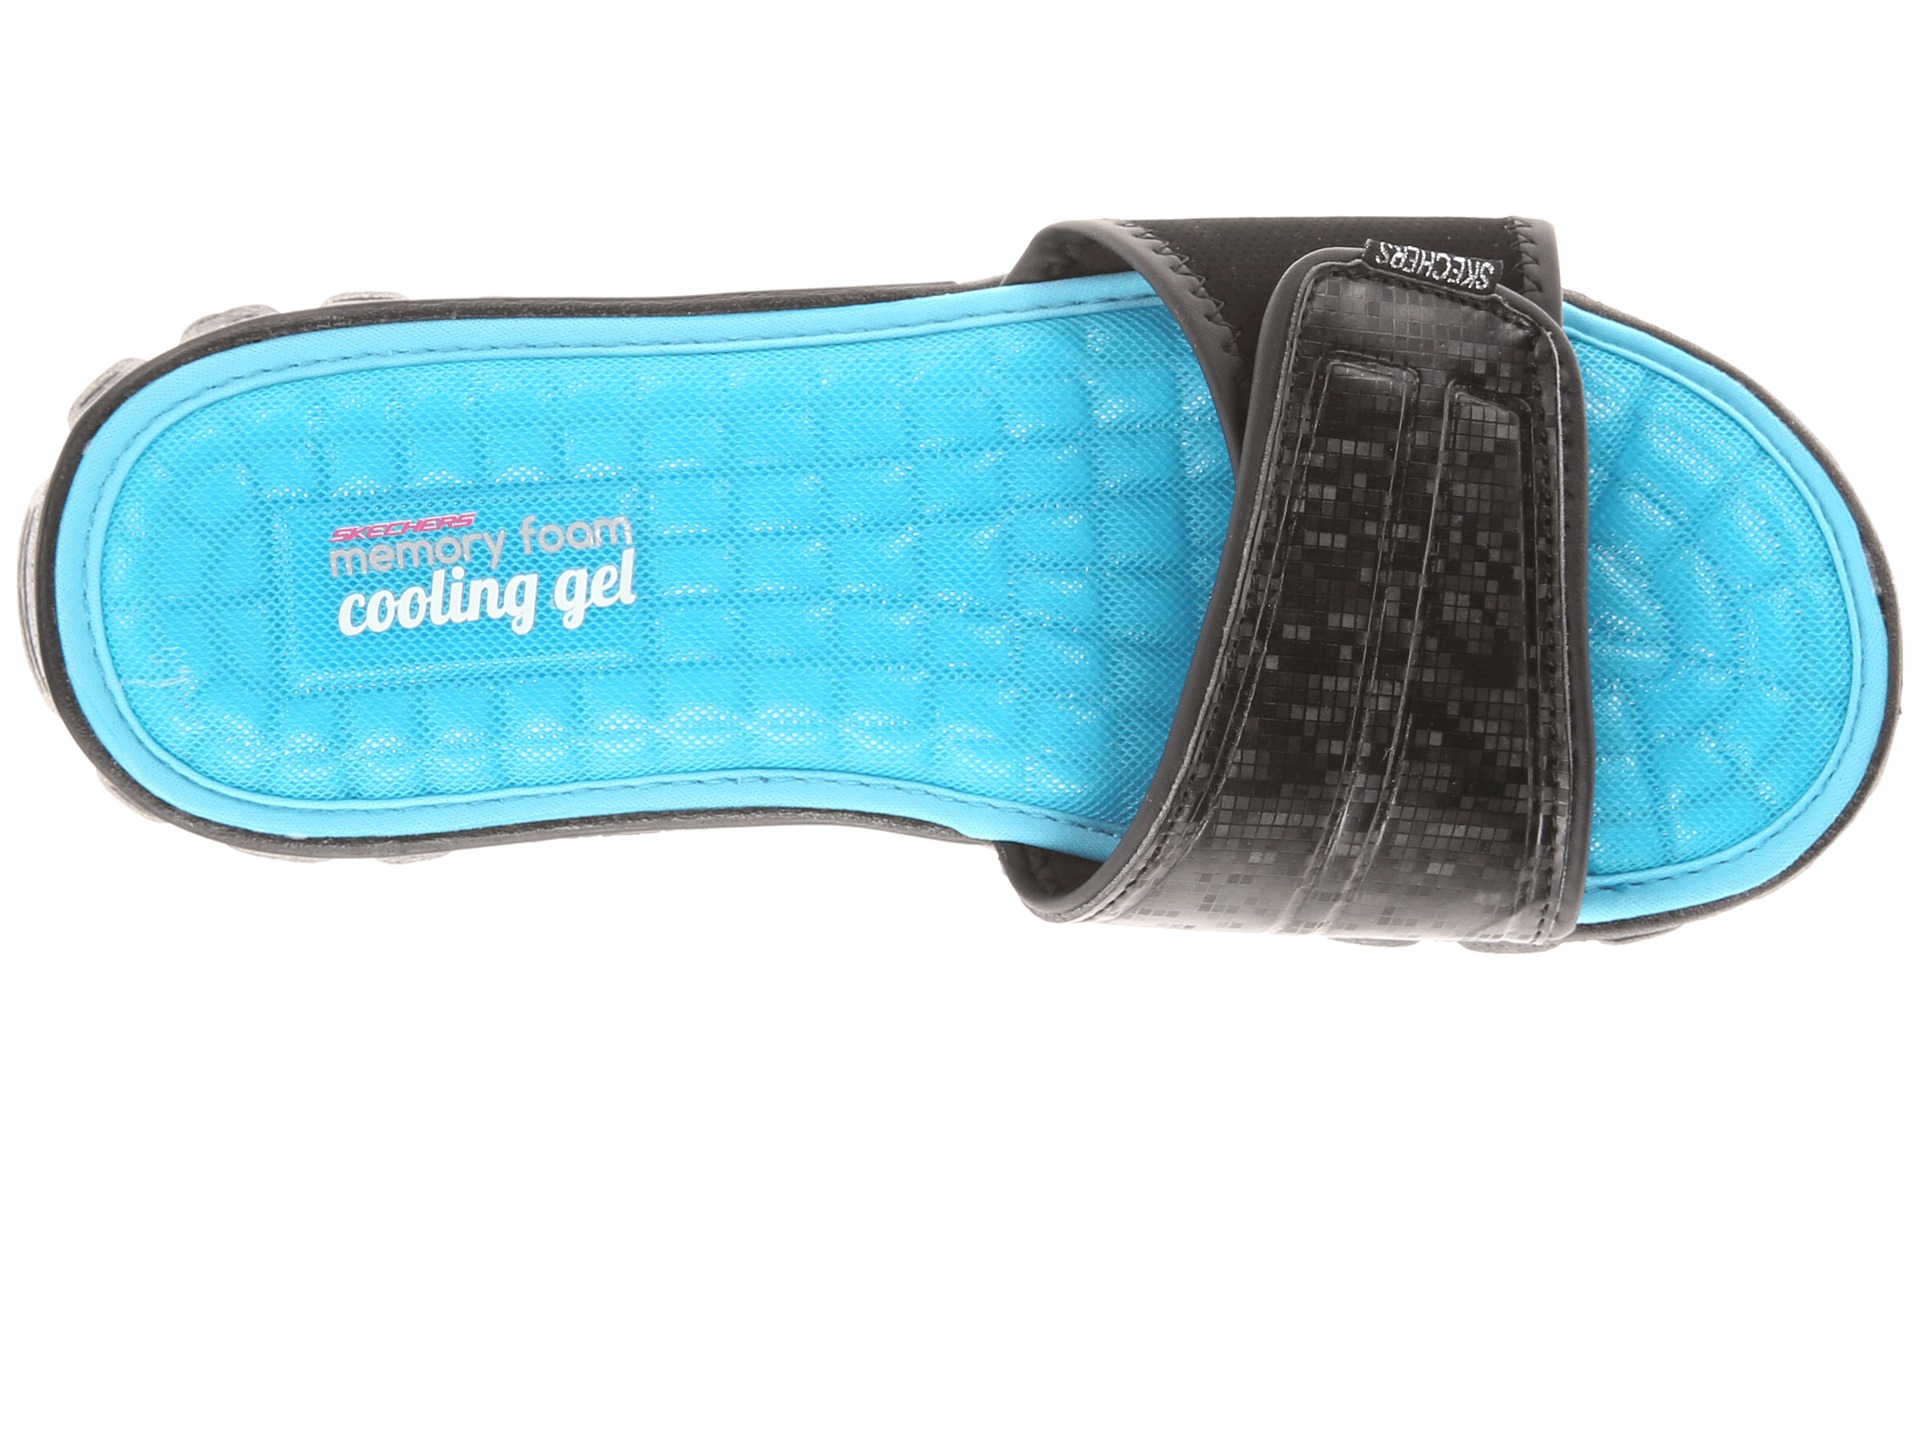 Skechers Sport Cooling Gel Slide Sandal | Shipped Free at Zappos